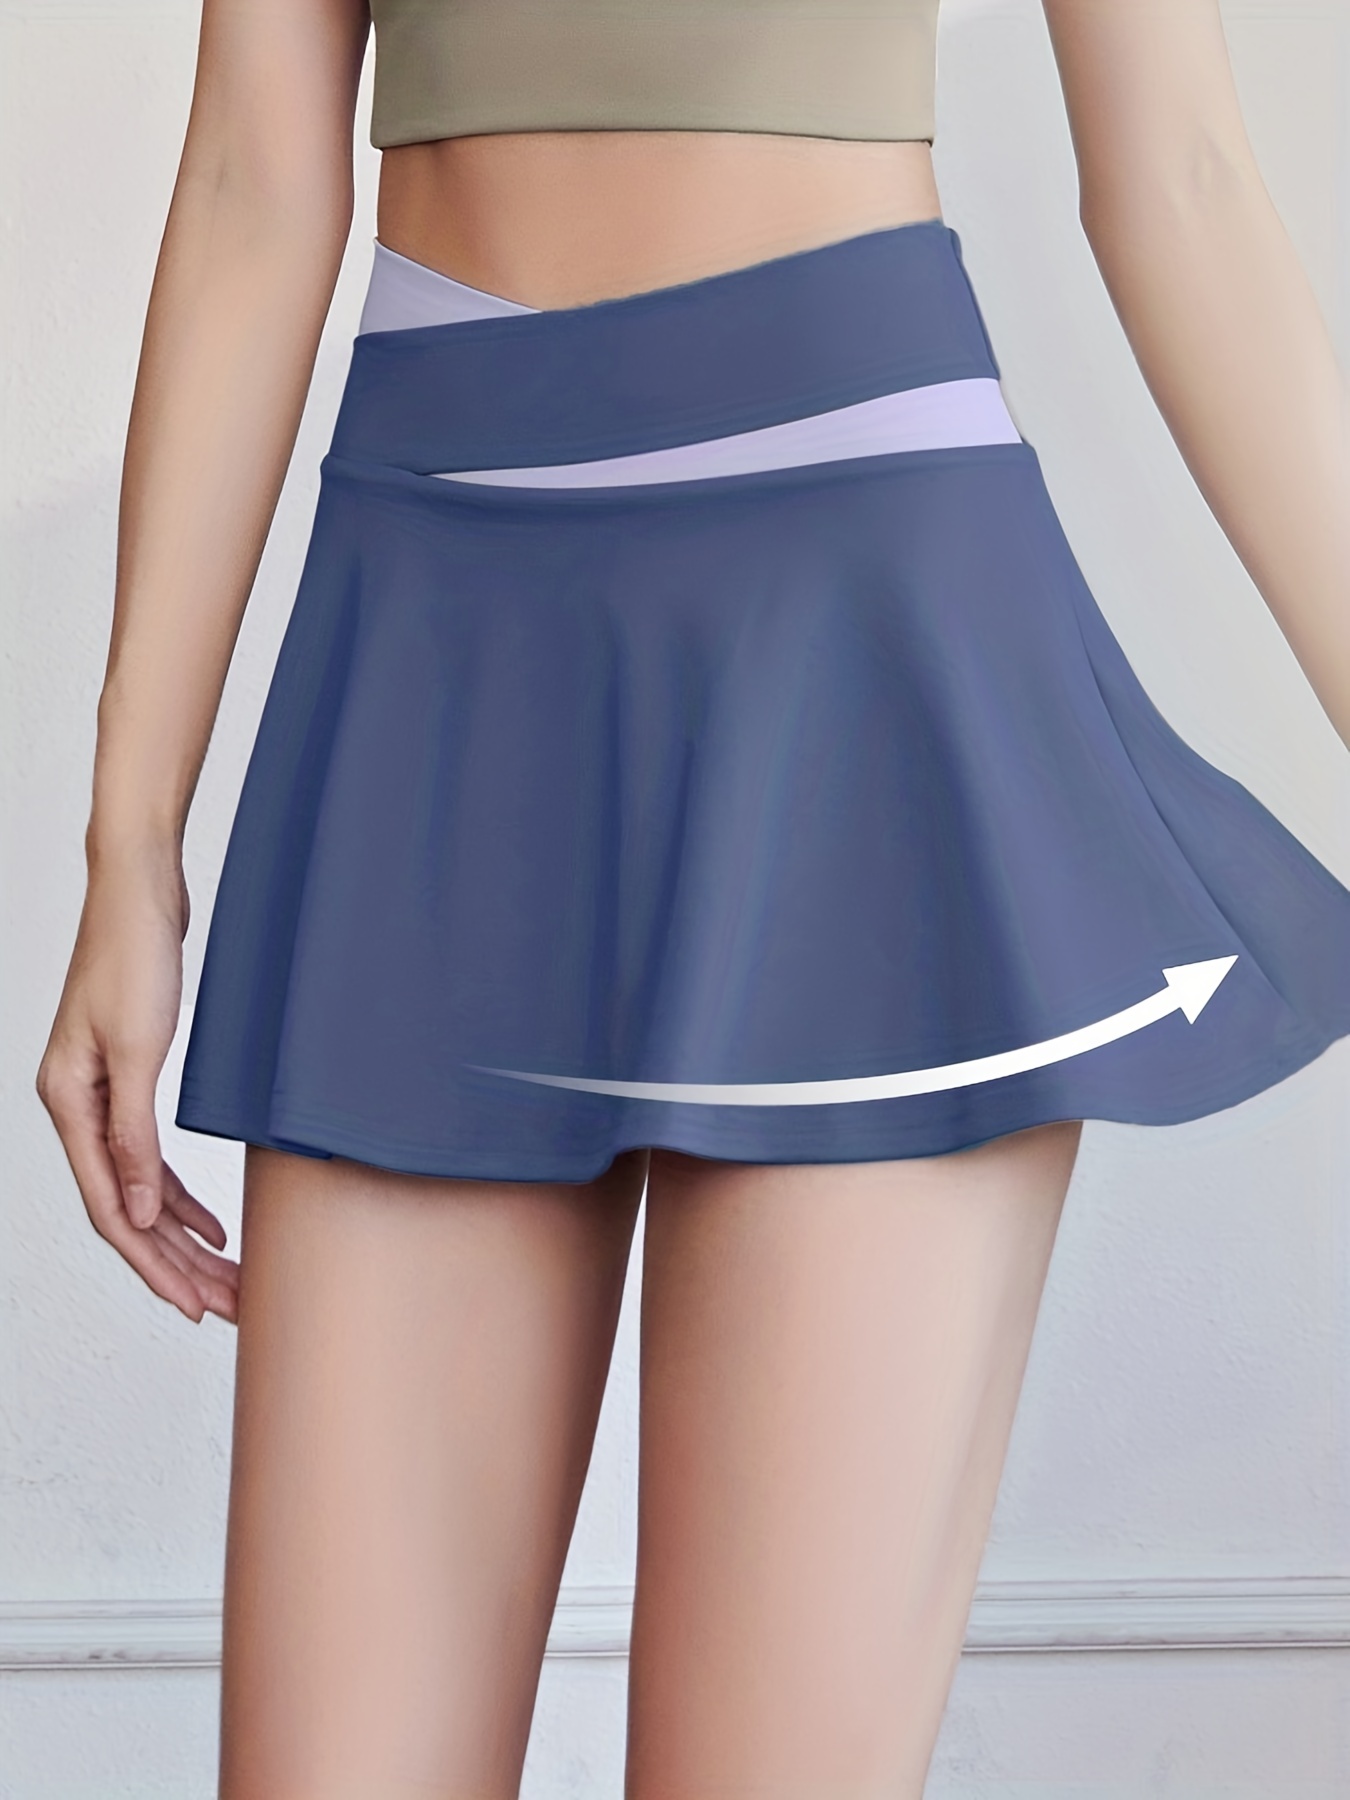 Women Skirt with Shorts 2 Pcs Tennis Set Quick Dry Gym Yoga